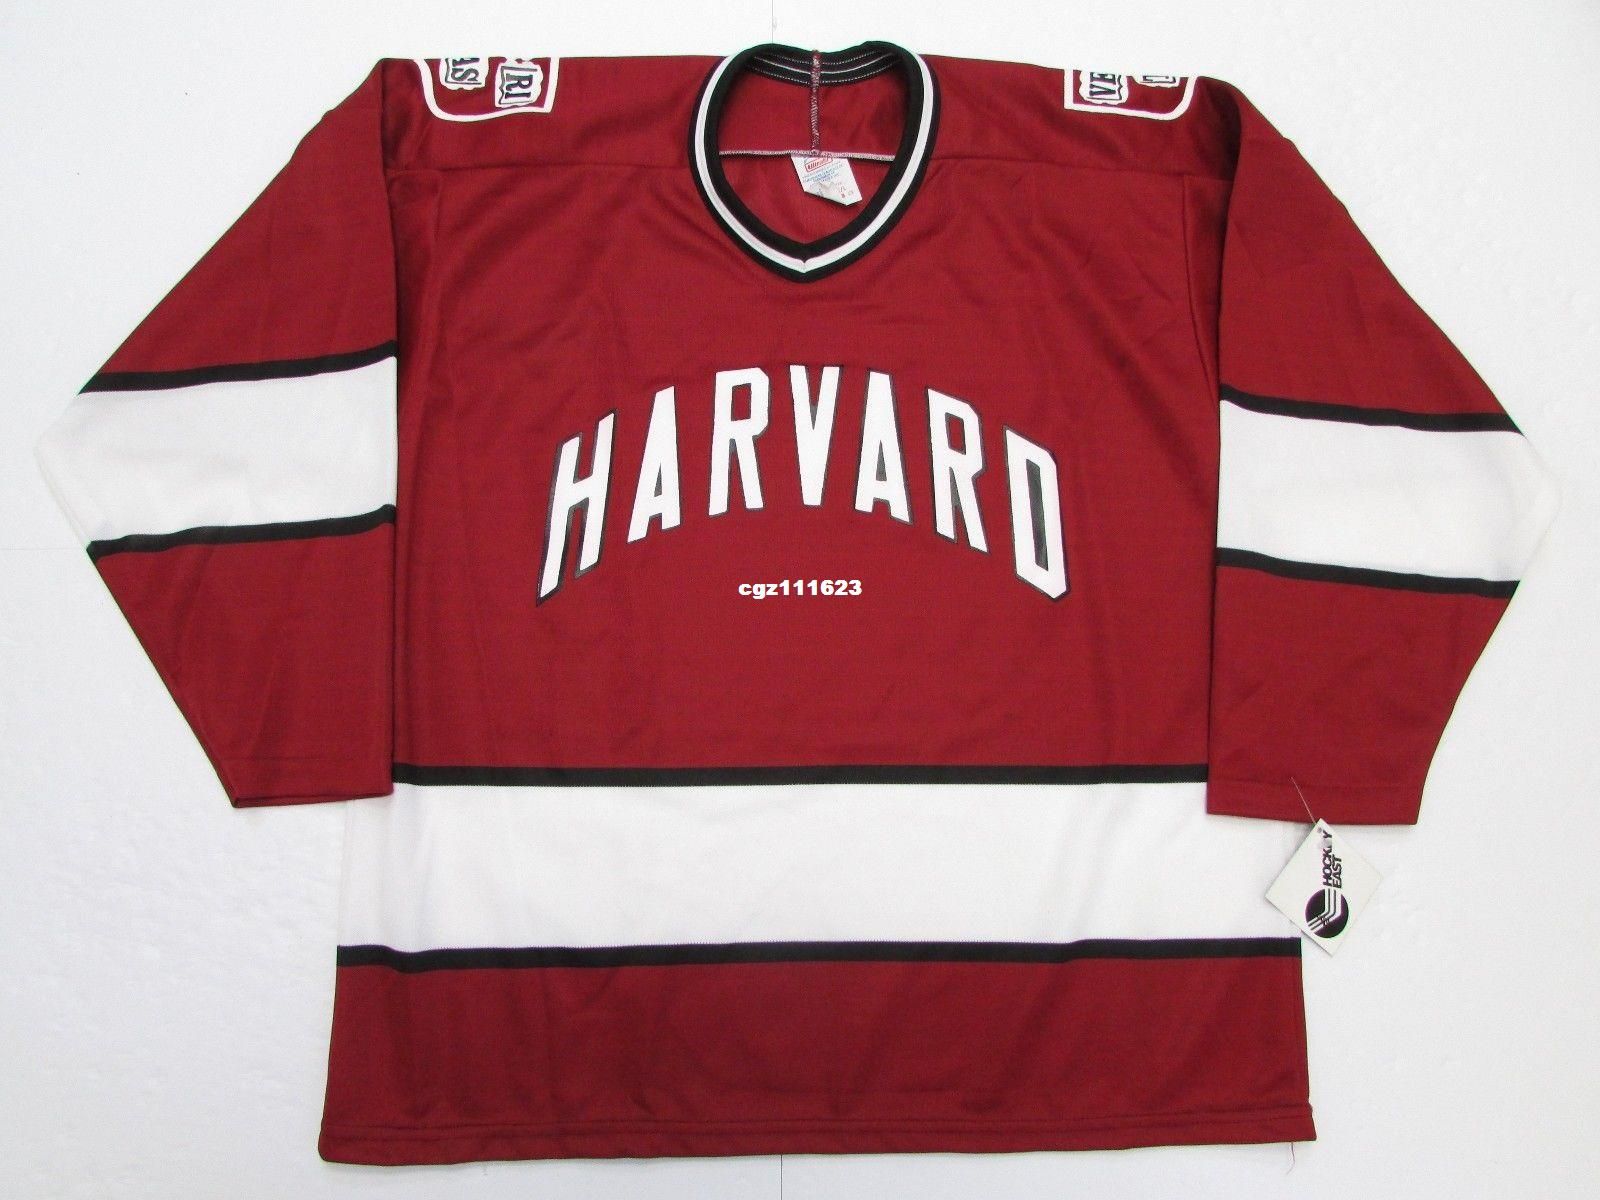 harvard hockey jersey- OFF 69 